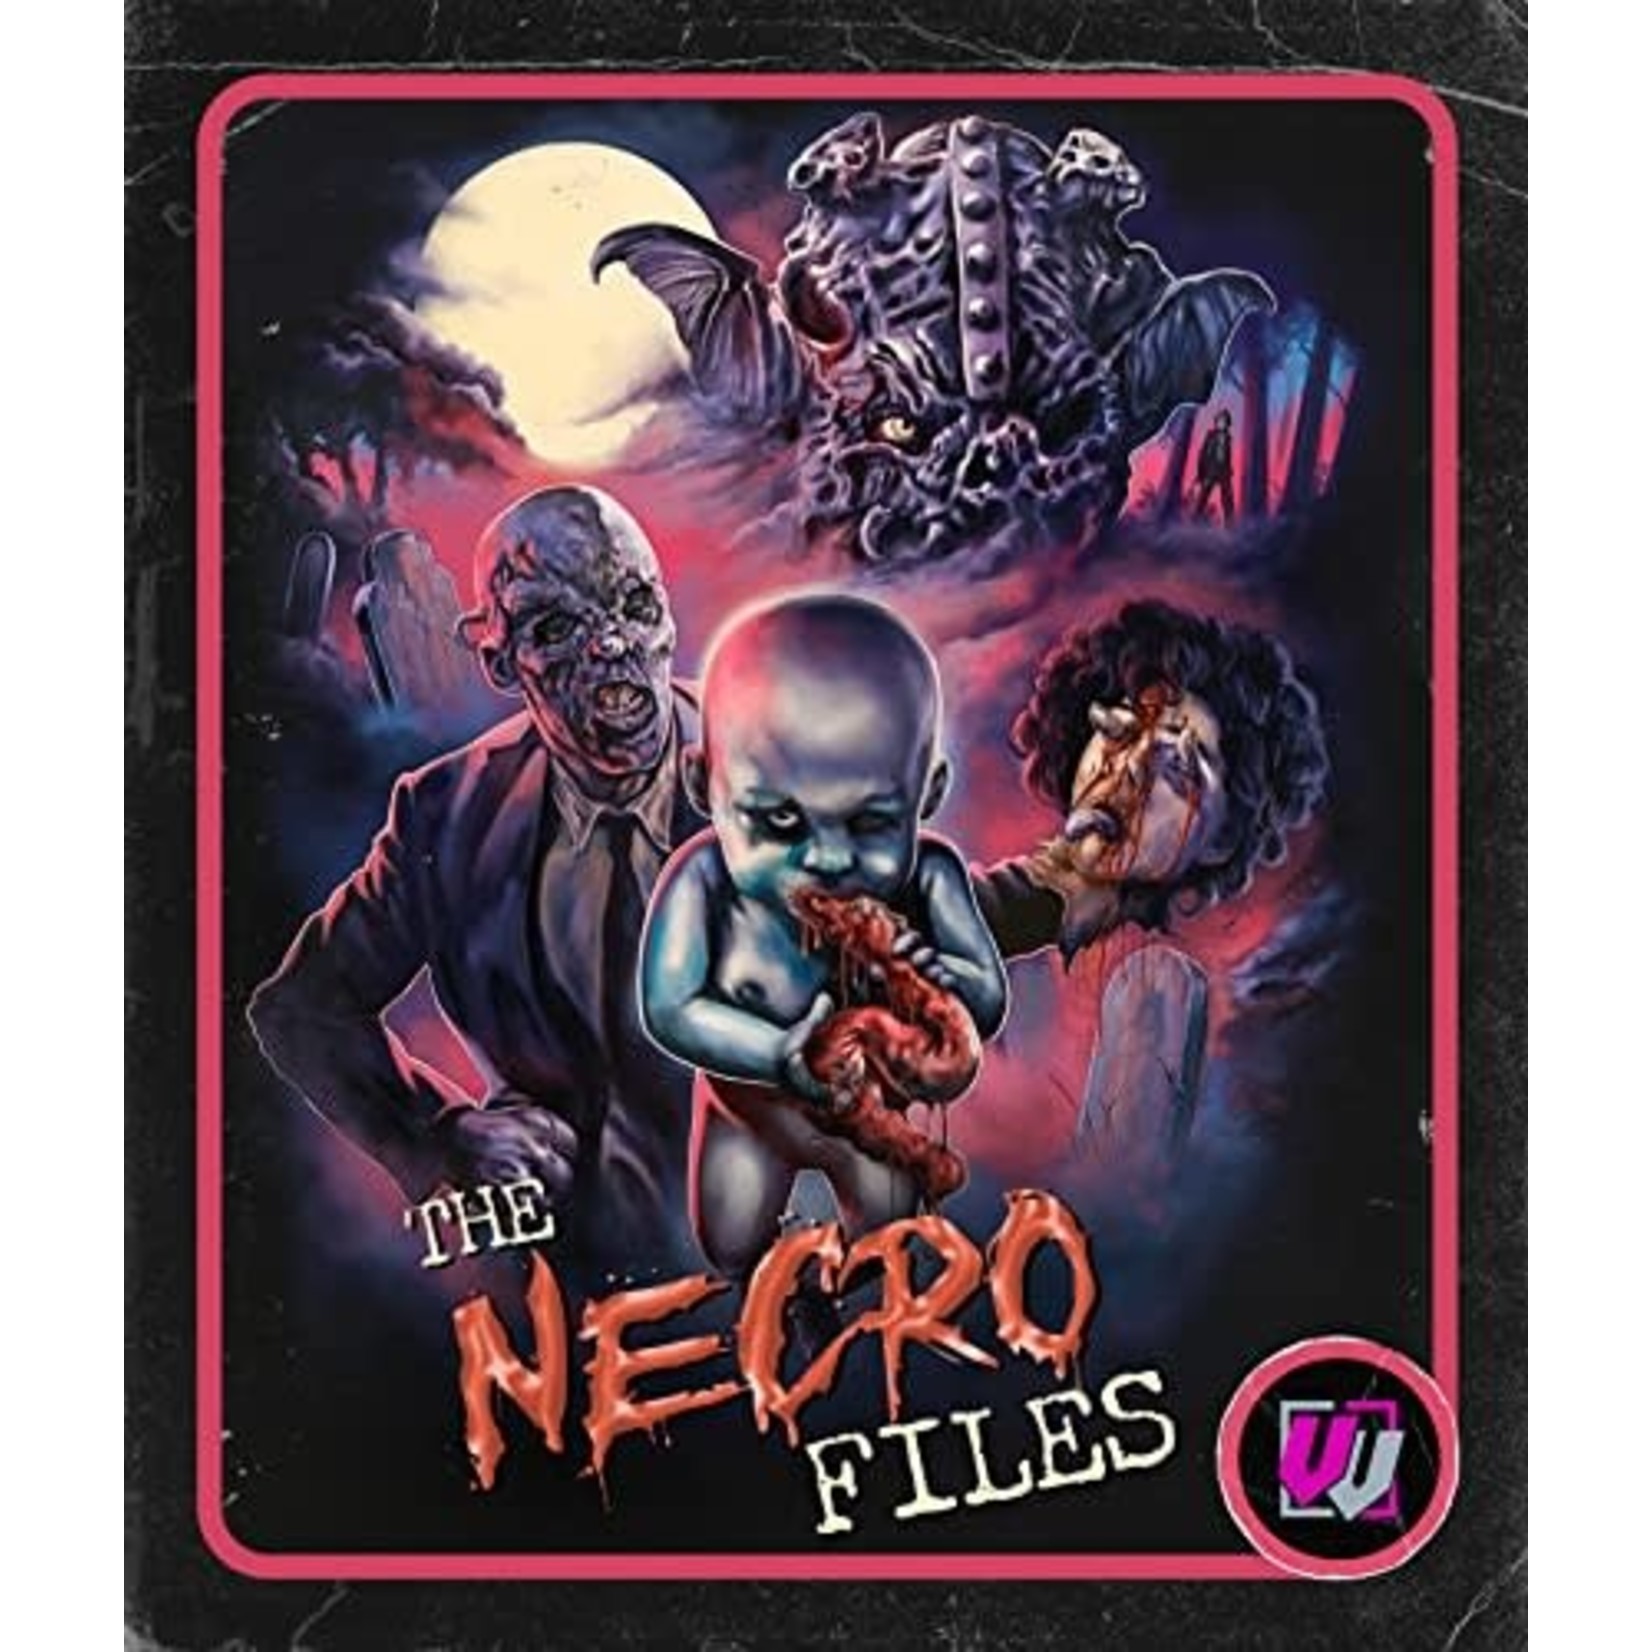 Necro Files (1997) [BRD]